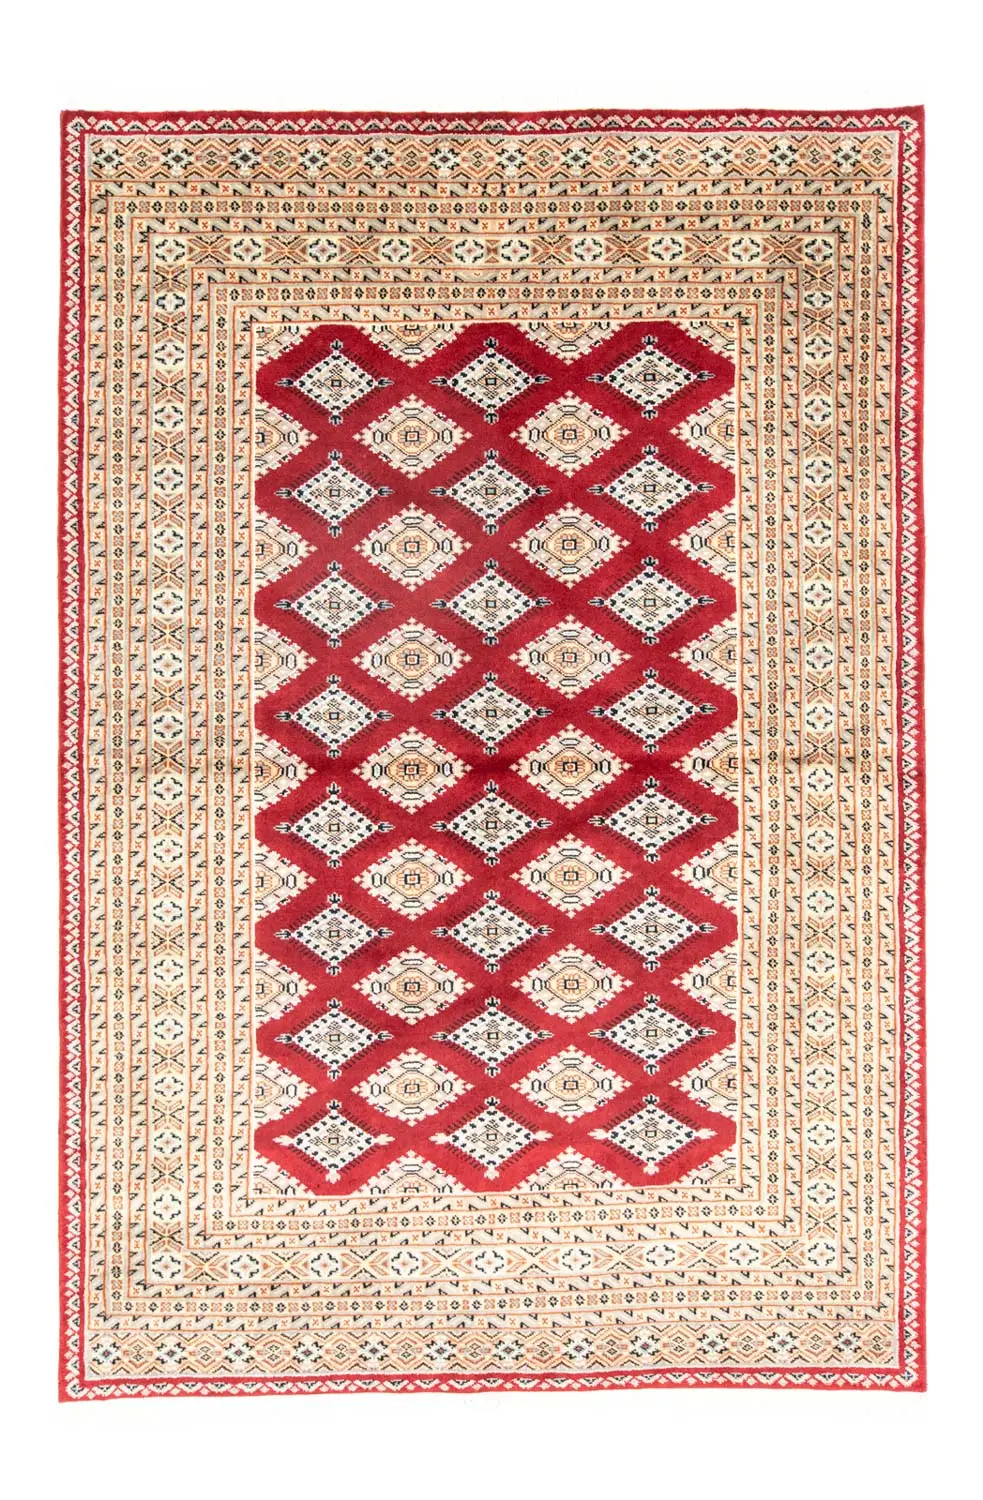 Pakistan 207 rot Teppich - - 143 x cm